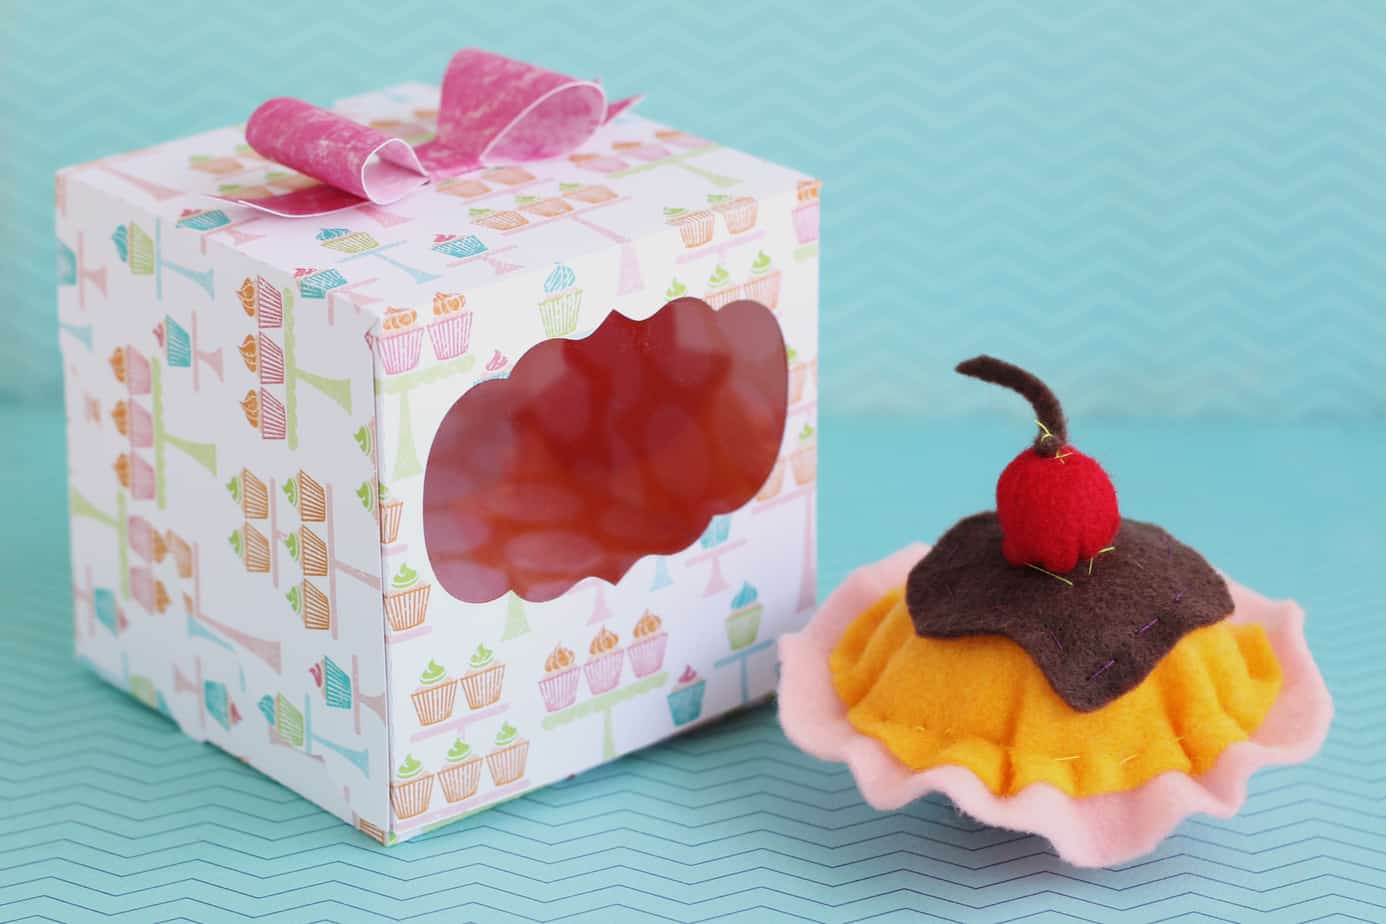 Felt Cupcake in a Box